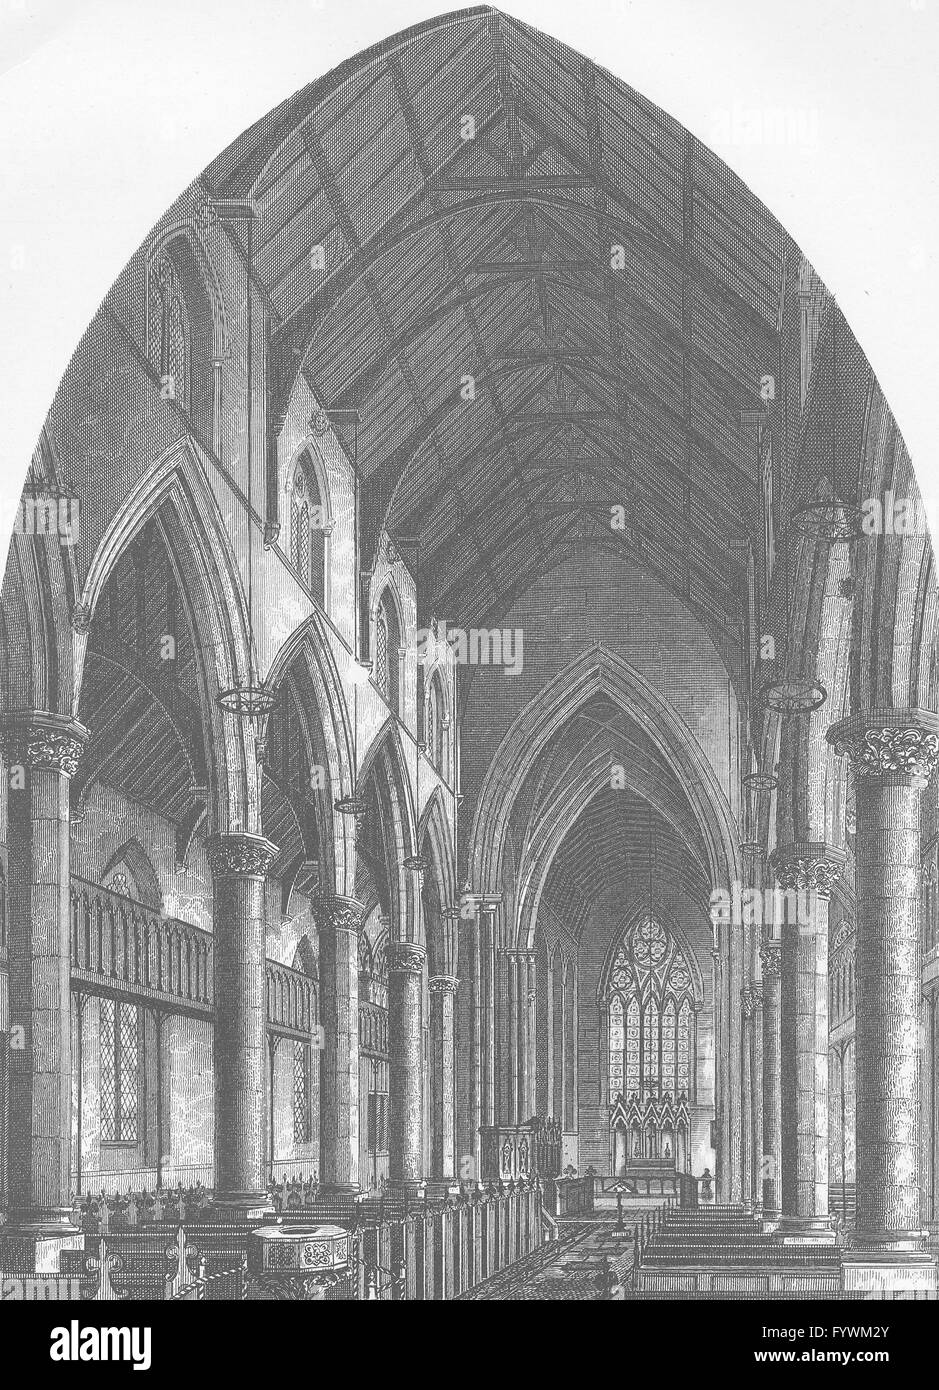 CAMBERWELL: St.Giles' Iglesia, Camberwell. Londres, grabado antiguo c1880 Foto de stock